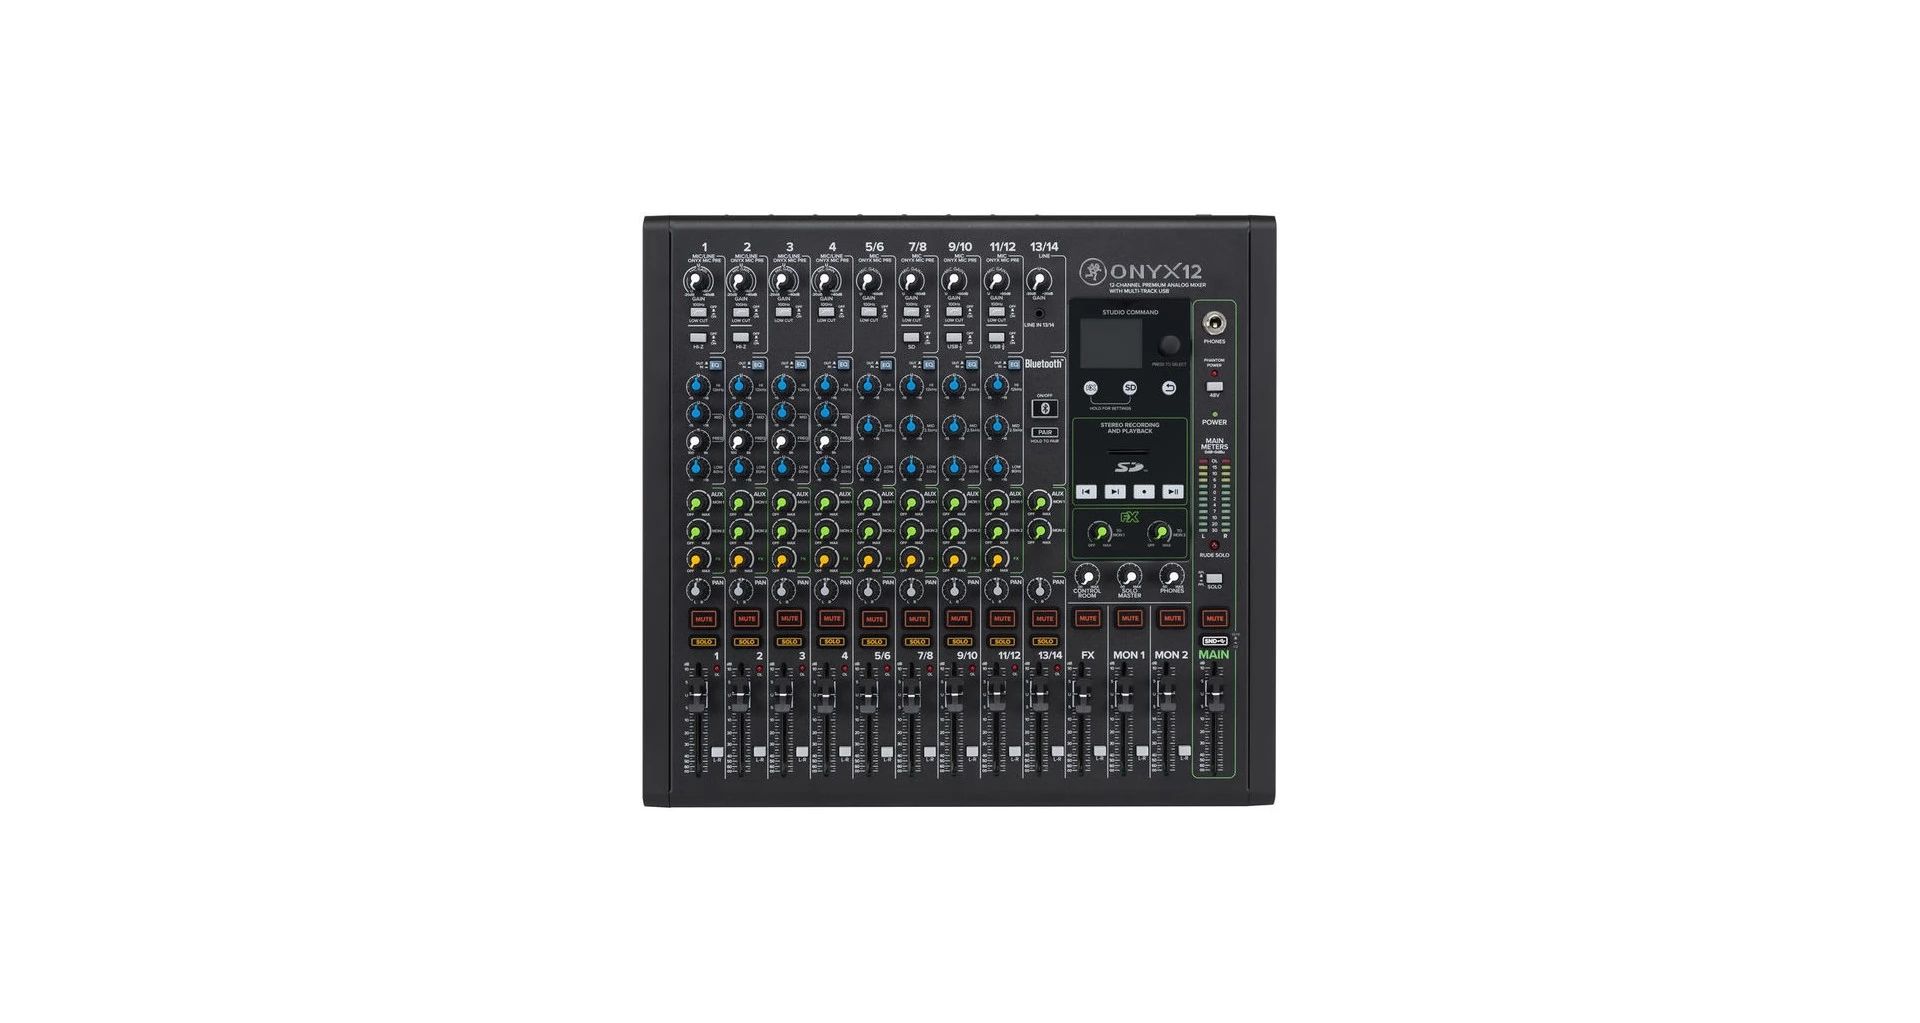 Mixere analogice - Mixer analog Mackie Onyx12, audioclub.ro